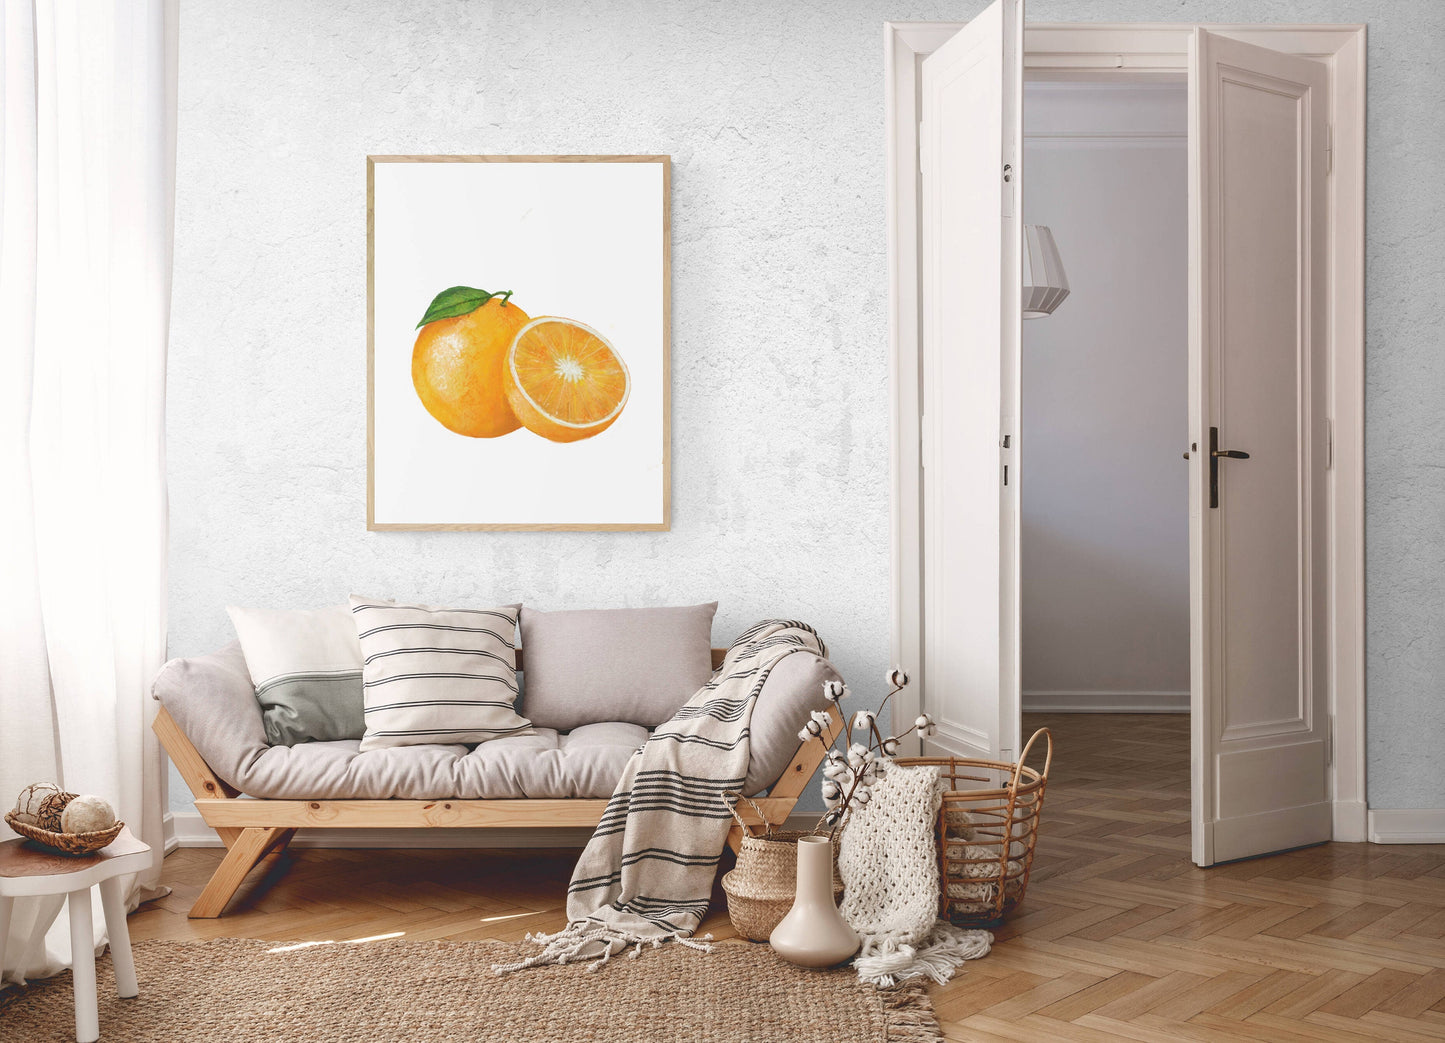 Orange Art Print, Fresh Orange Wall Art, Kitchen Wall Hanging, Dining Room Decor, Citrus Painting, Fruit Illustration, Farmhouse Wall Decor